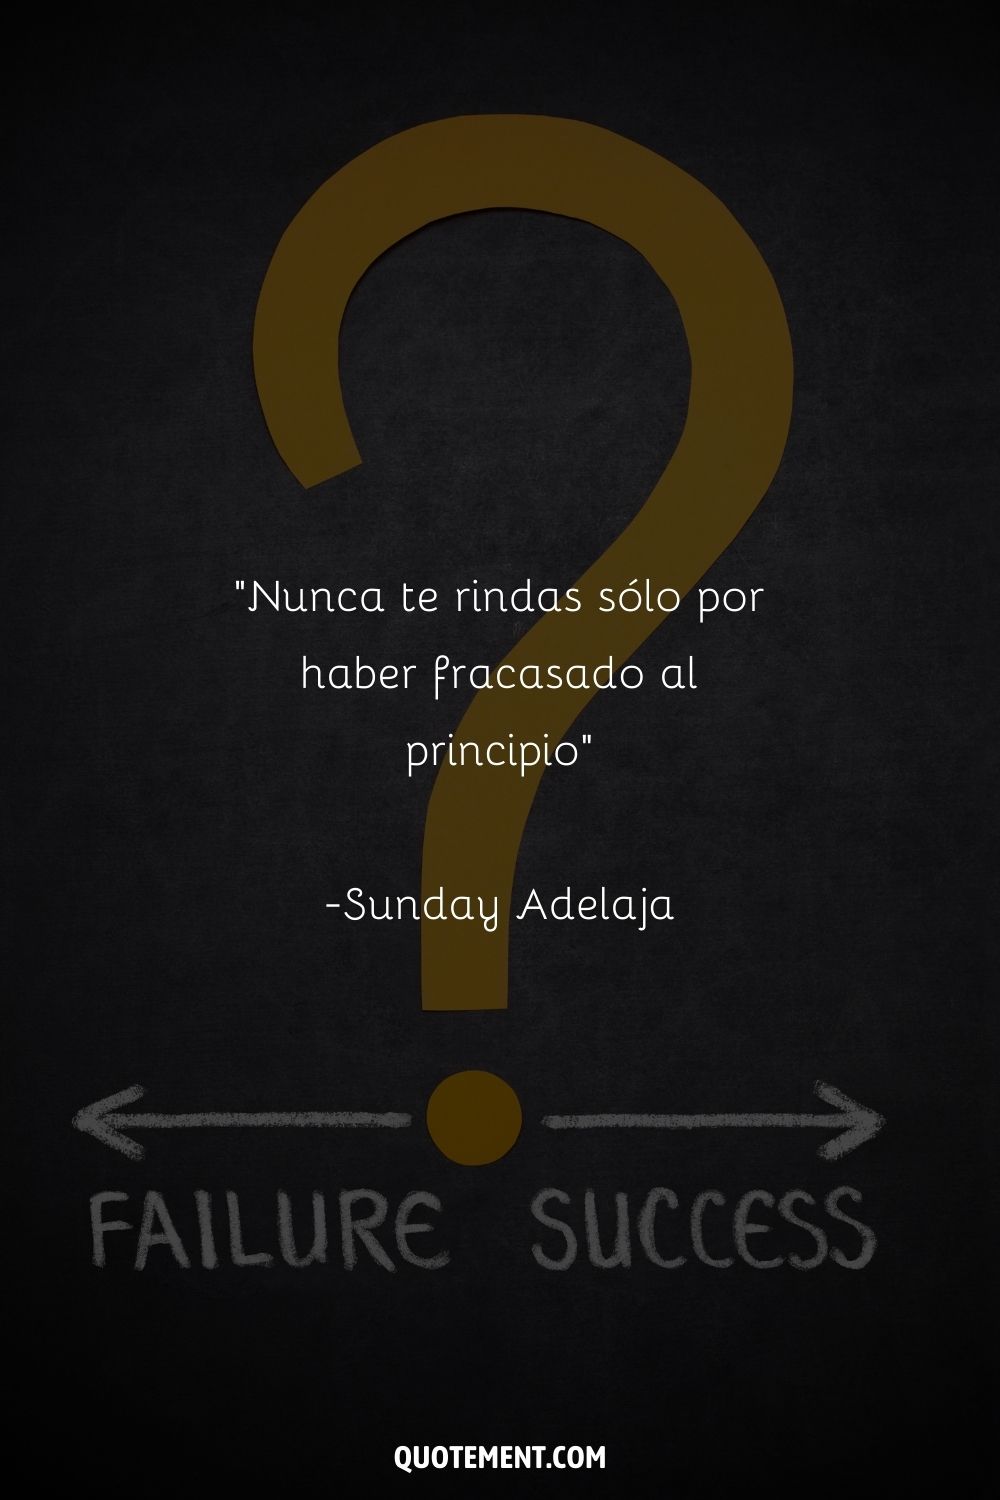 "Nunca te rindas por haber fracasado al principio" - Sunday Adelaja